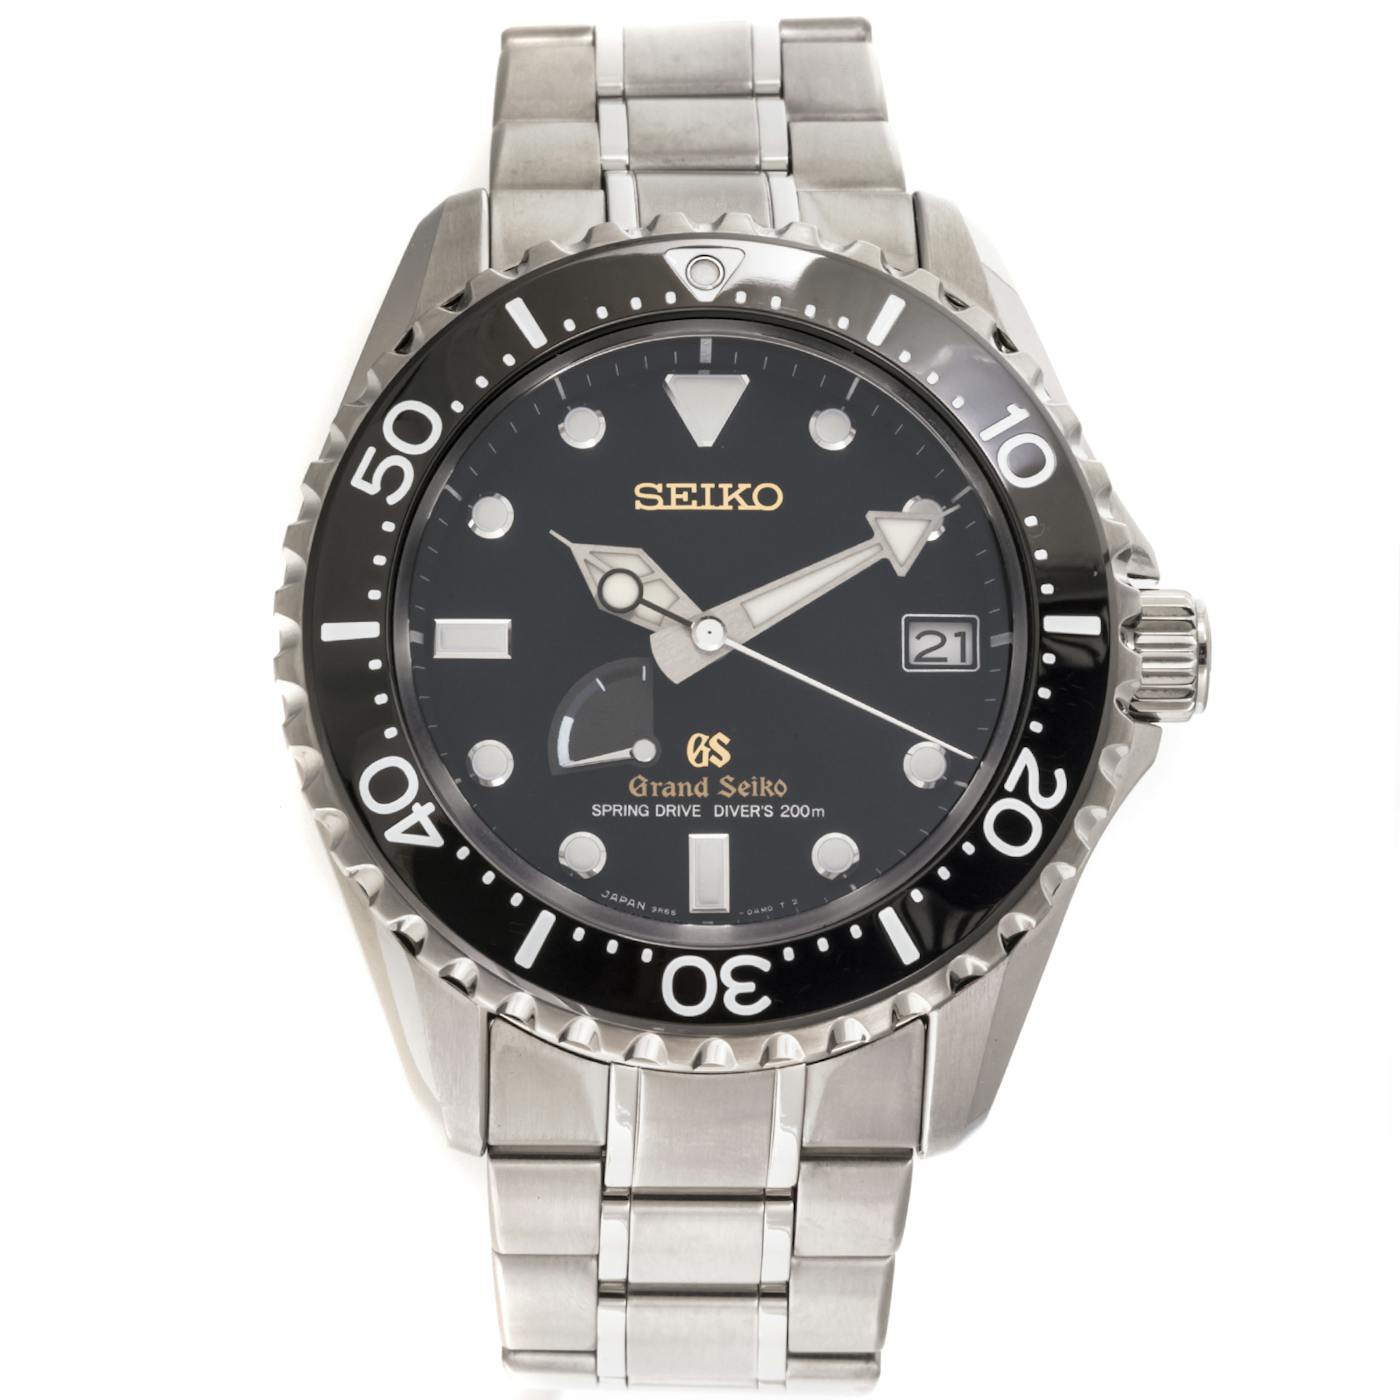 Seiko Grand Seiko Spring Drive Diver SBGA031 | WatchBox